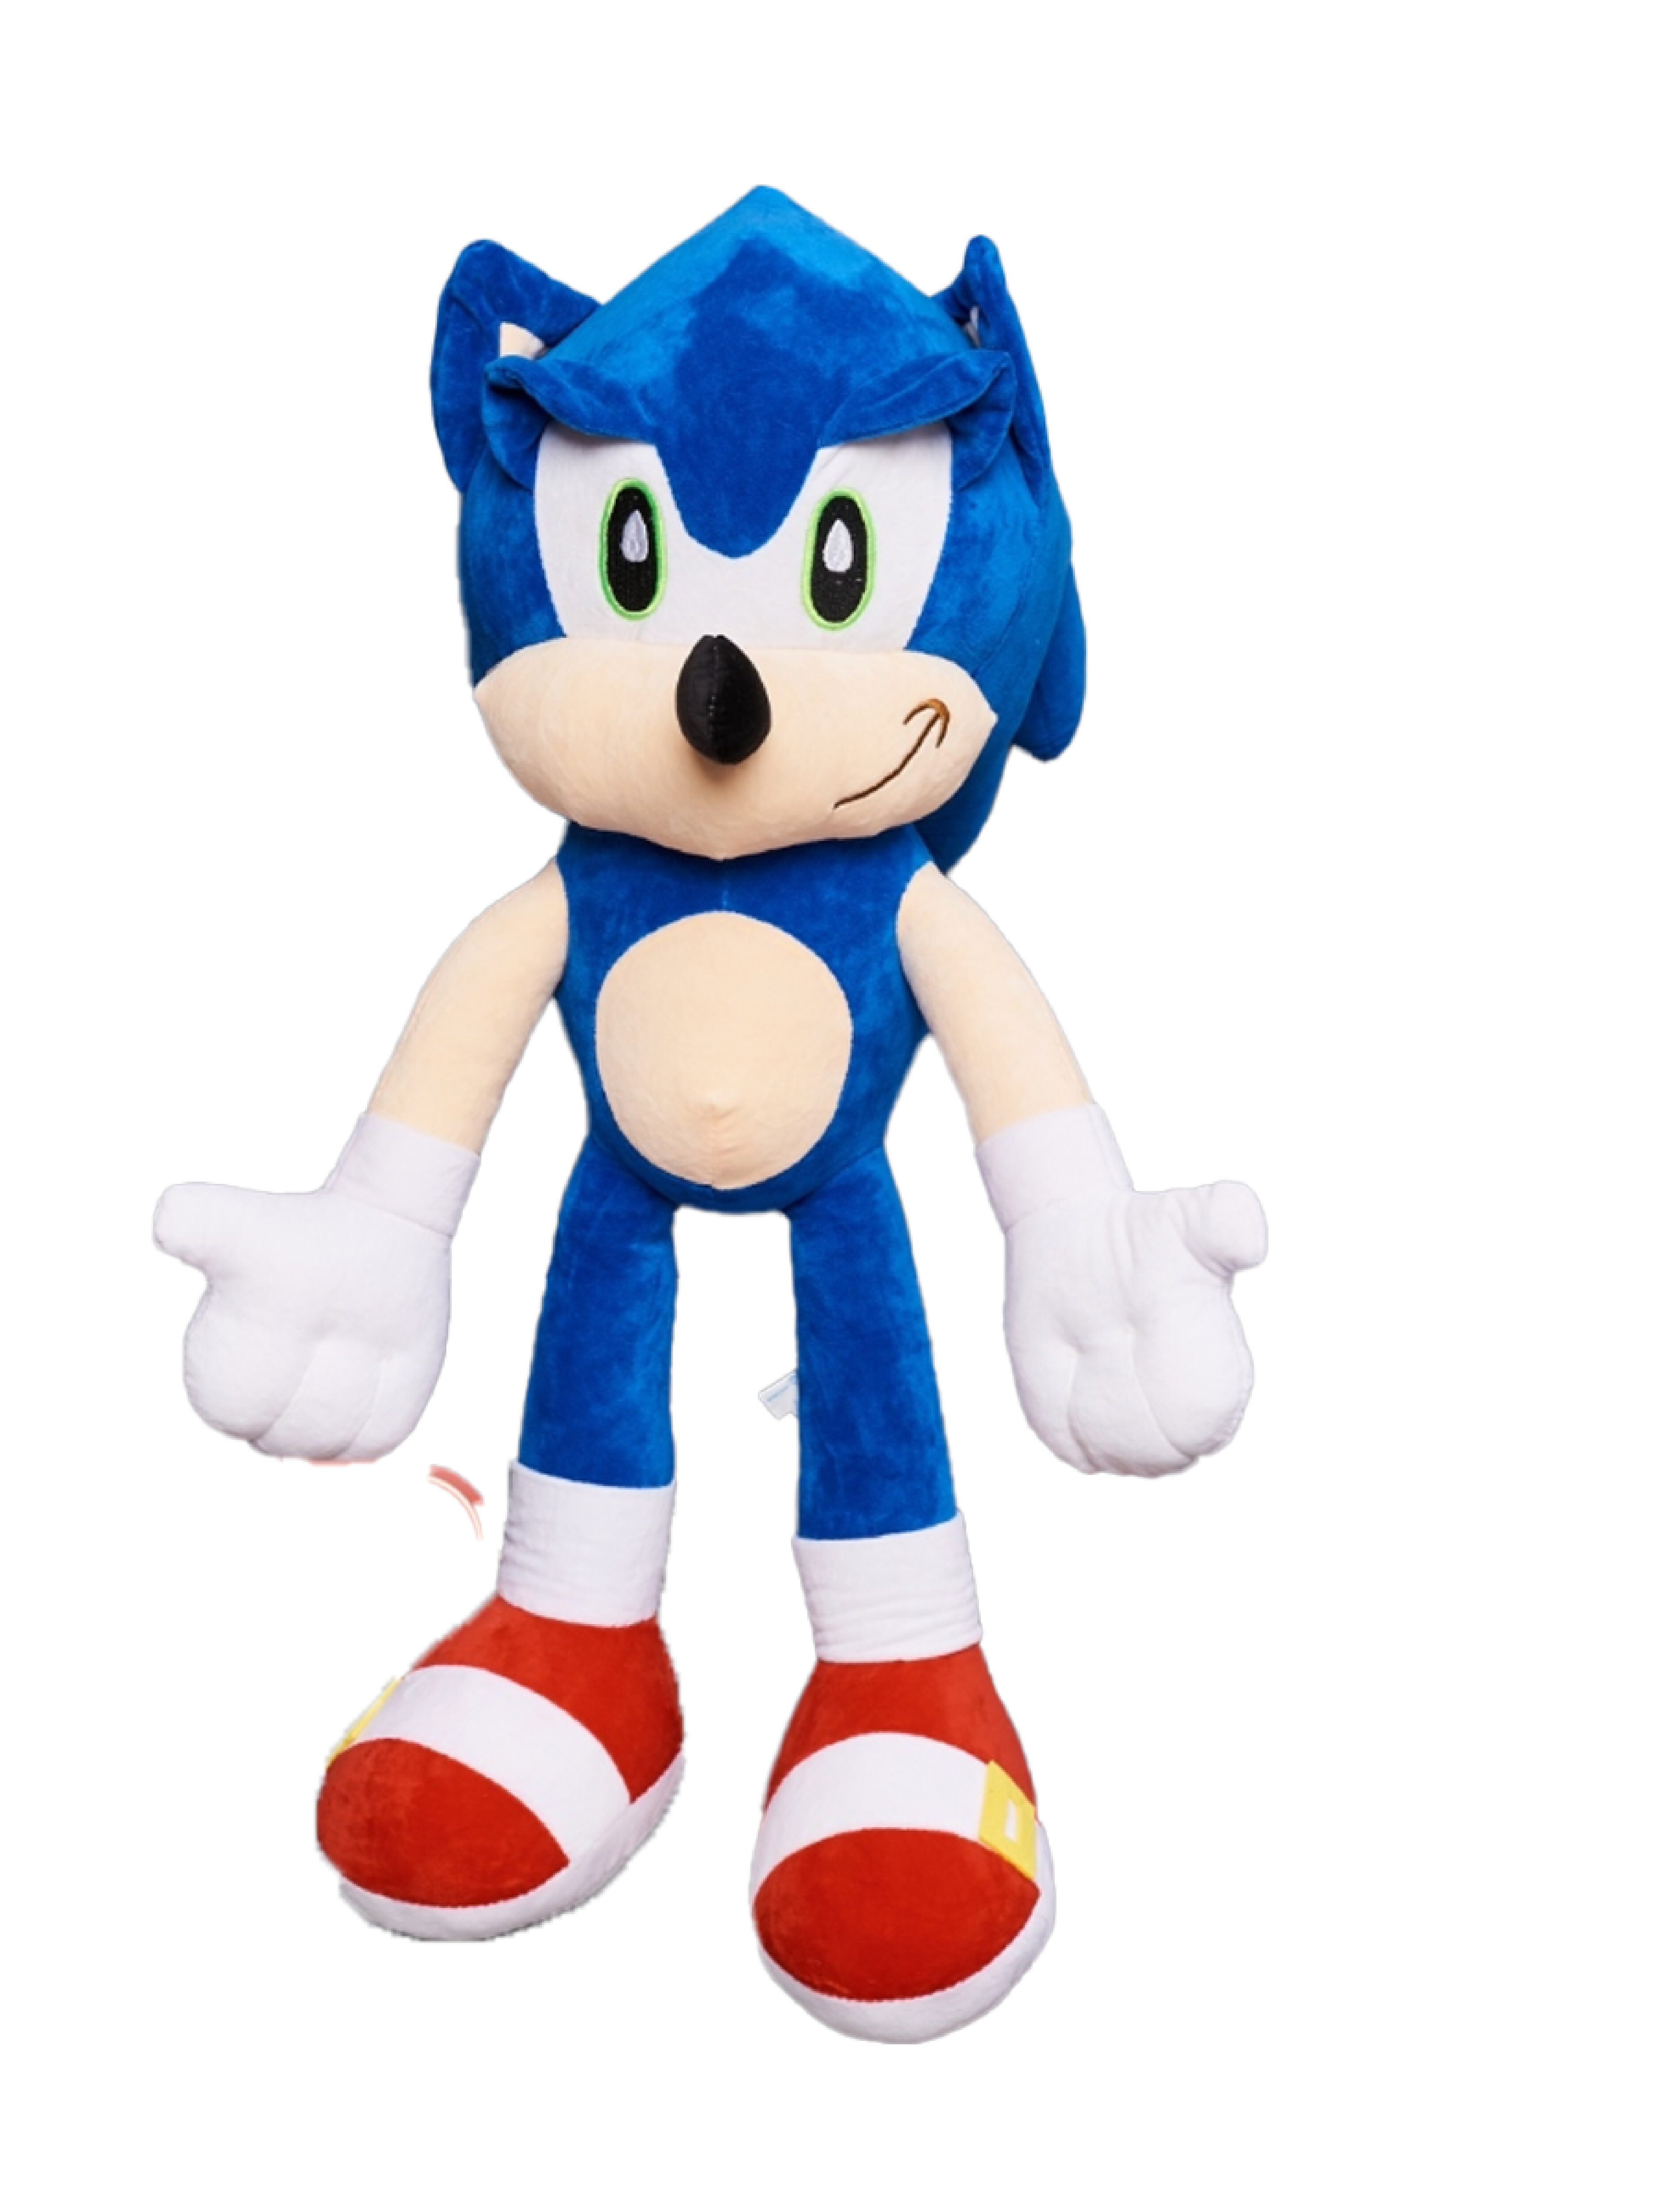 Мягкая игрушка Sun Toys Соник Ёж Sonic the Hedgehog синий 28 см тюбинг мистер вело премиум сердечки белые на синем фоне 90 см синий mrvt0044